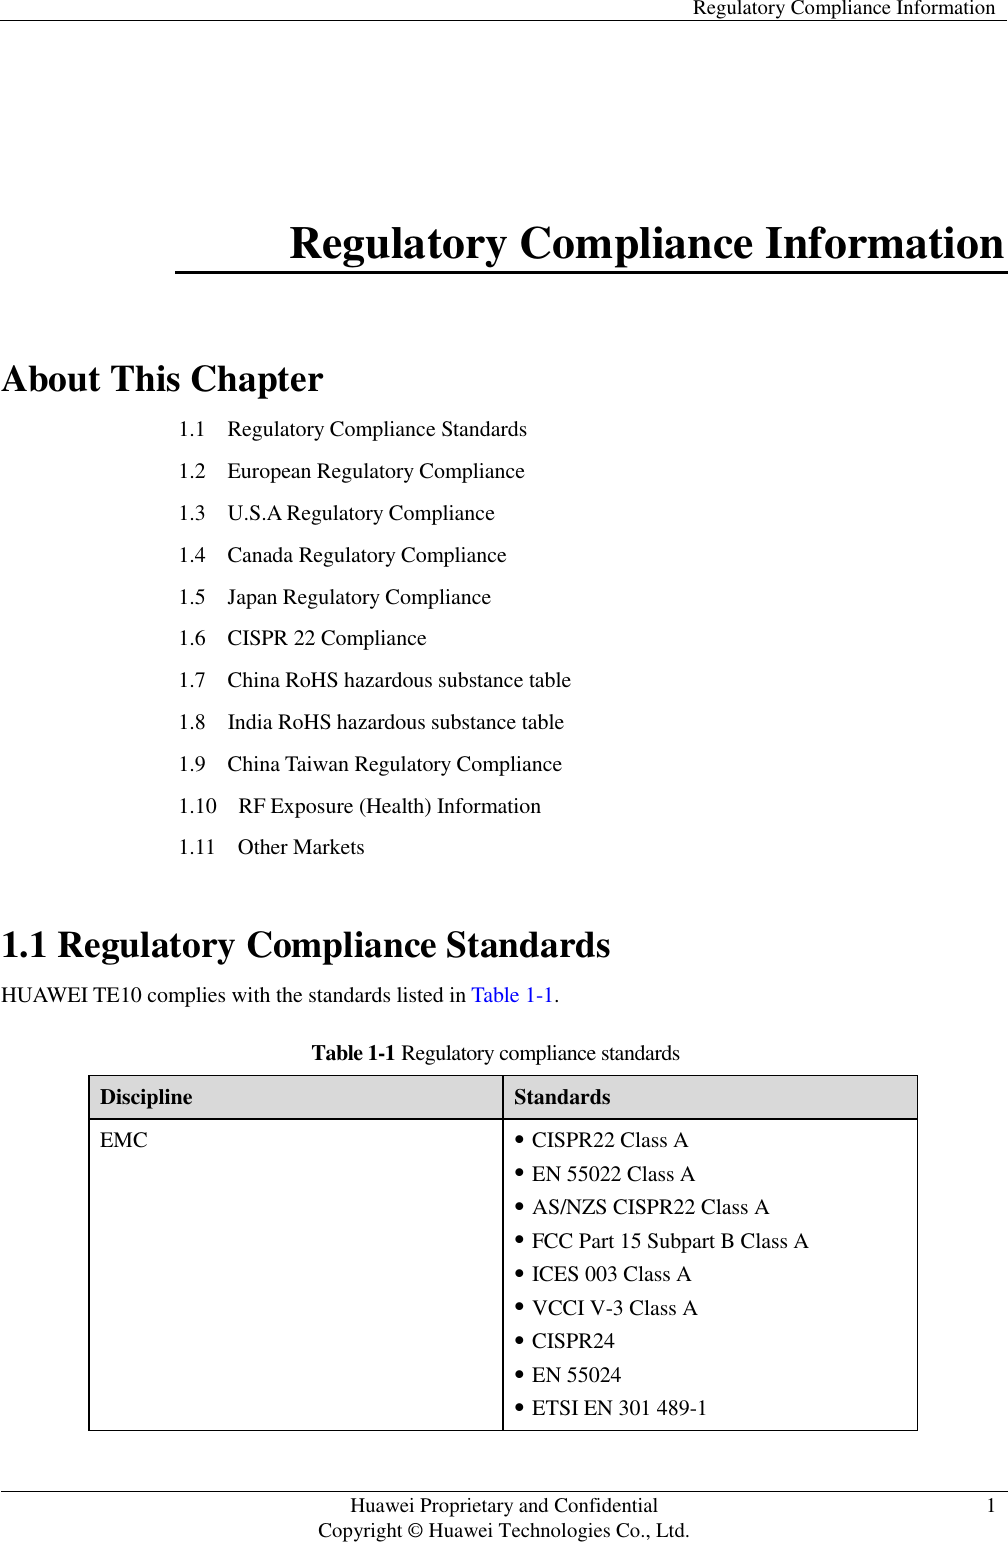   Regulatory Compliance Information   Huawei Proprietary and Confidential                                     Copyright © Huawei Technologies Co., Ltd. 1  Regulatory Compliance Information About This Chapter 1.1    Regulatory Compliance Standards 1.2    European Regulatory Compliance 1.3    U.S.A Regulatory Compliance 1.4    Canada Regulatory Compliance 1.5  Japan Regulatory Compliance 1.6  CISPR 22 Compliance 1.7    China RoHS hazardous substance table 1.8    India RoHS hazardous substance table 1.9    China Taiwan Regulatory Compliance 1.10    RF Exposure (Health) Information 1.11    Other Markets 1.1 Regulatory Compliance Standards HUAWEI TE10 complies with the standards listed in Table 1-1. Table 1-1 Regulatory compliance standards Discipline Standards EMC  CISPR22 Class A  EN 55022 Class A  AS/NZS CISPR22 Class A  FCC Part 15 Subpart B Class A  ICES 003 Class A  VCCI V-3 Class A  CISPR24  EN 55024  ETSI EN 301 489-1   